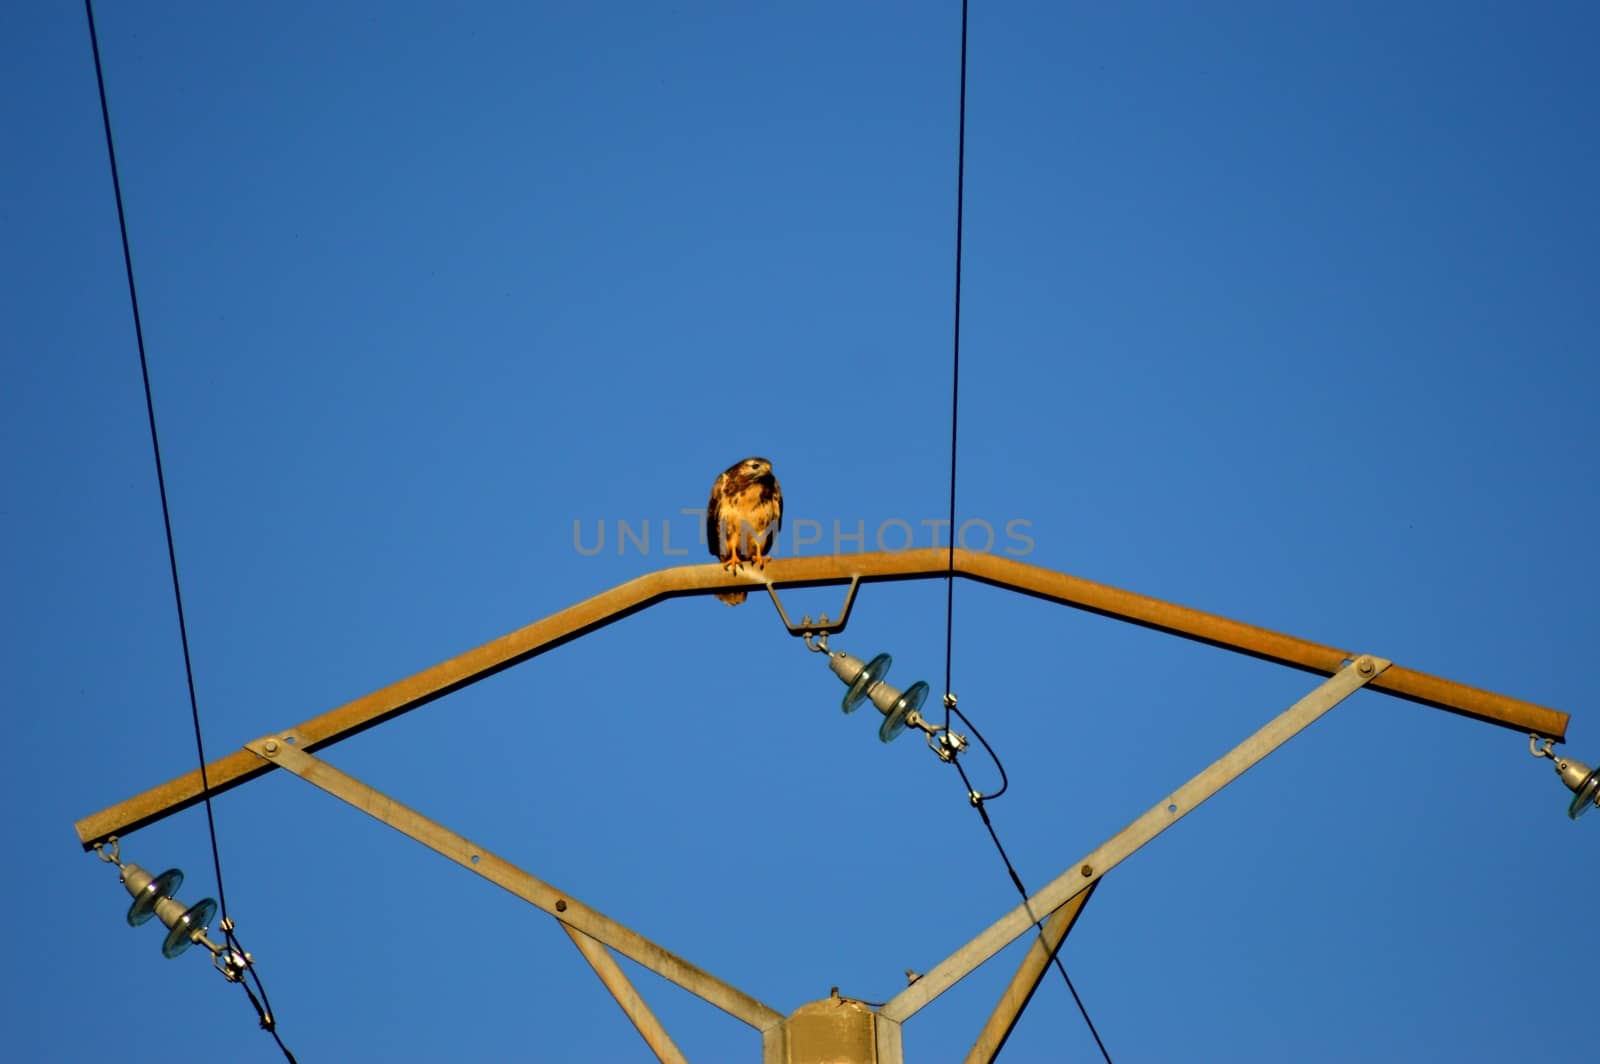 A raptor landed on a pole in a blue sky in Belgium